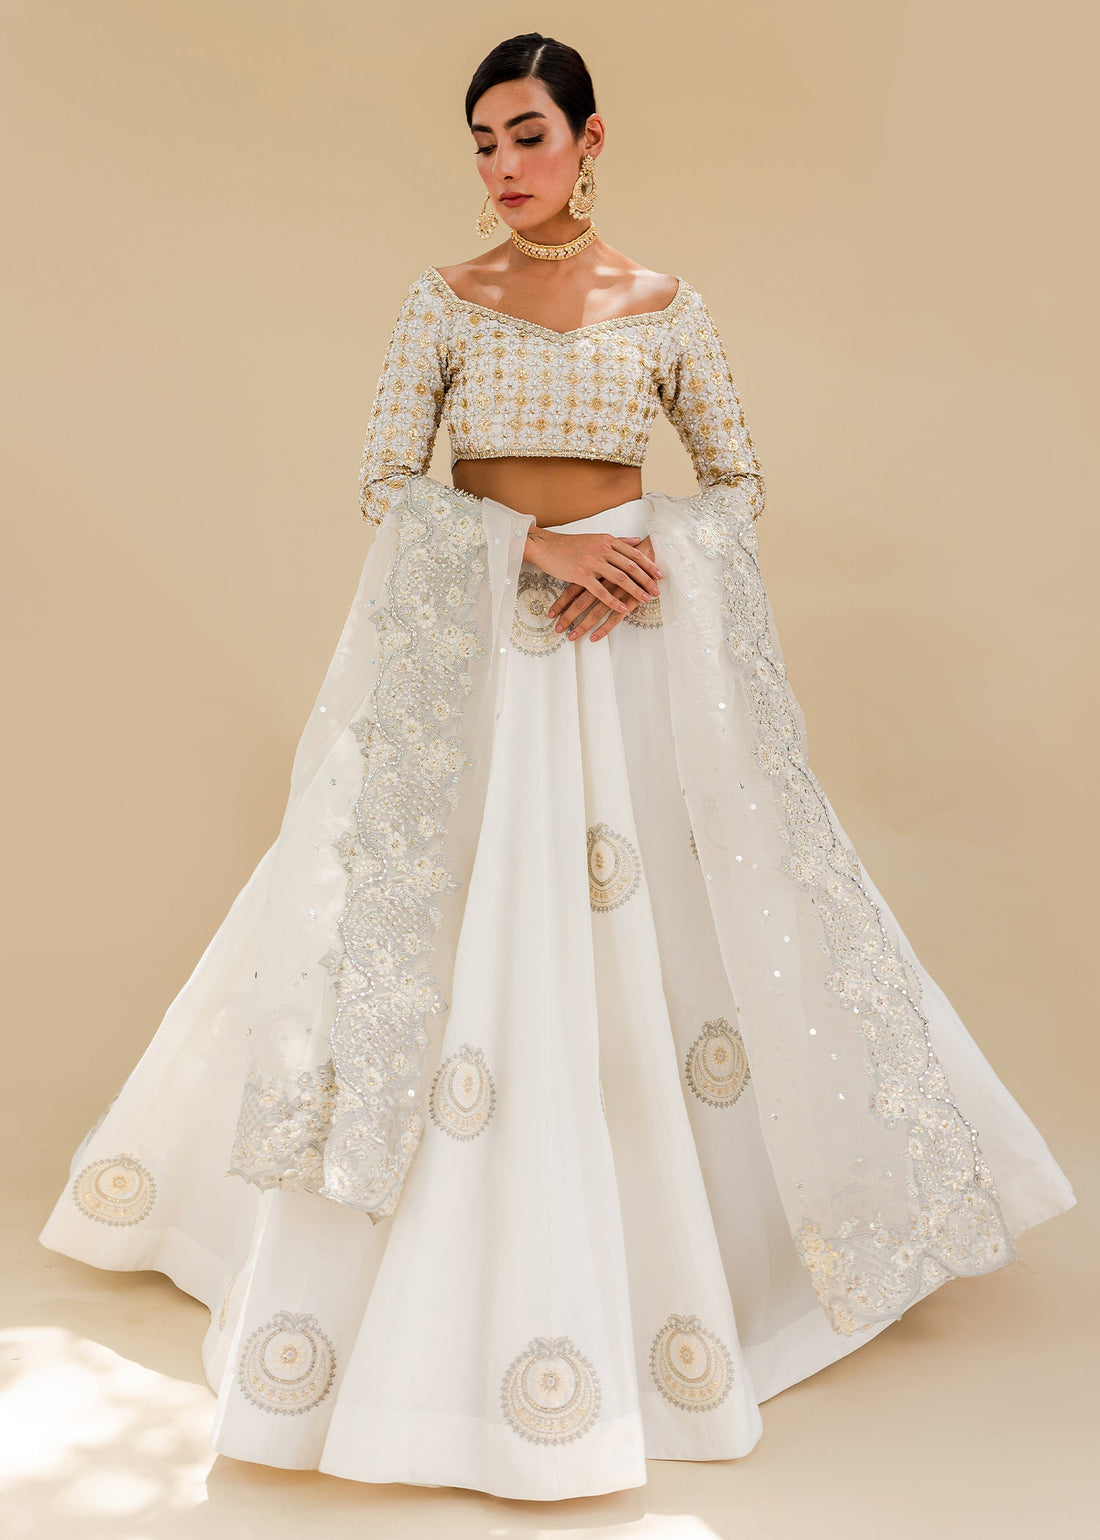 Sadaf Fawad Khan | Zinnia Festive Formals | Aynur - Khanumjan  Pakistani Clothes and Designer Dresses in UK, USA 